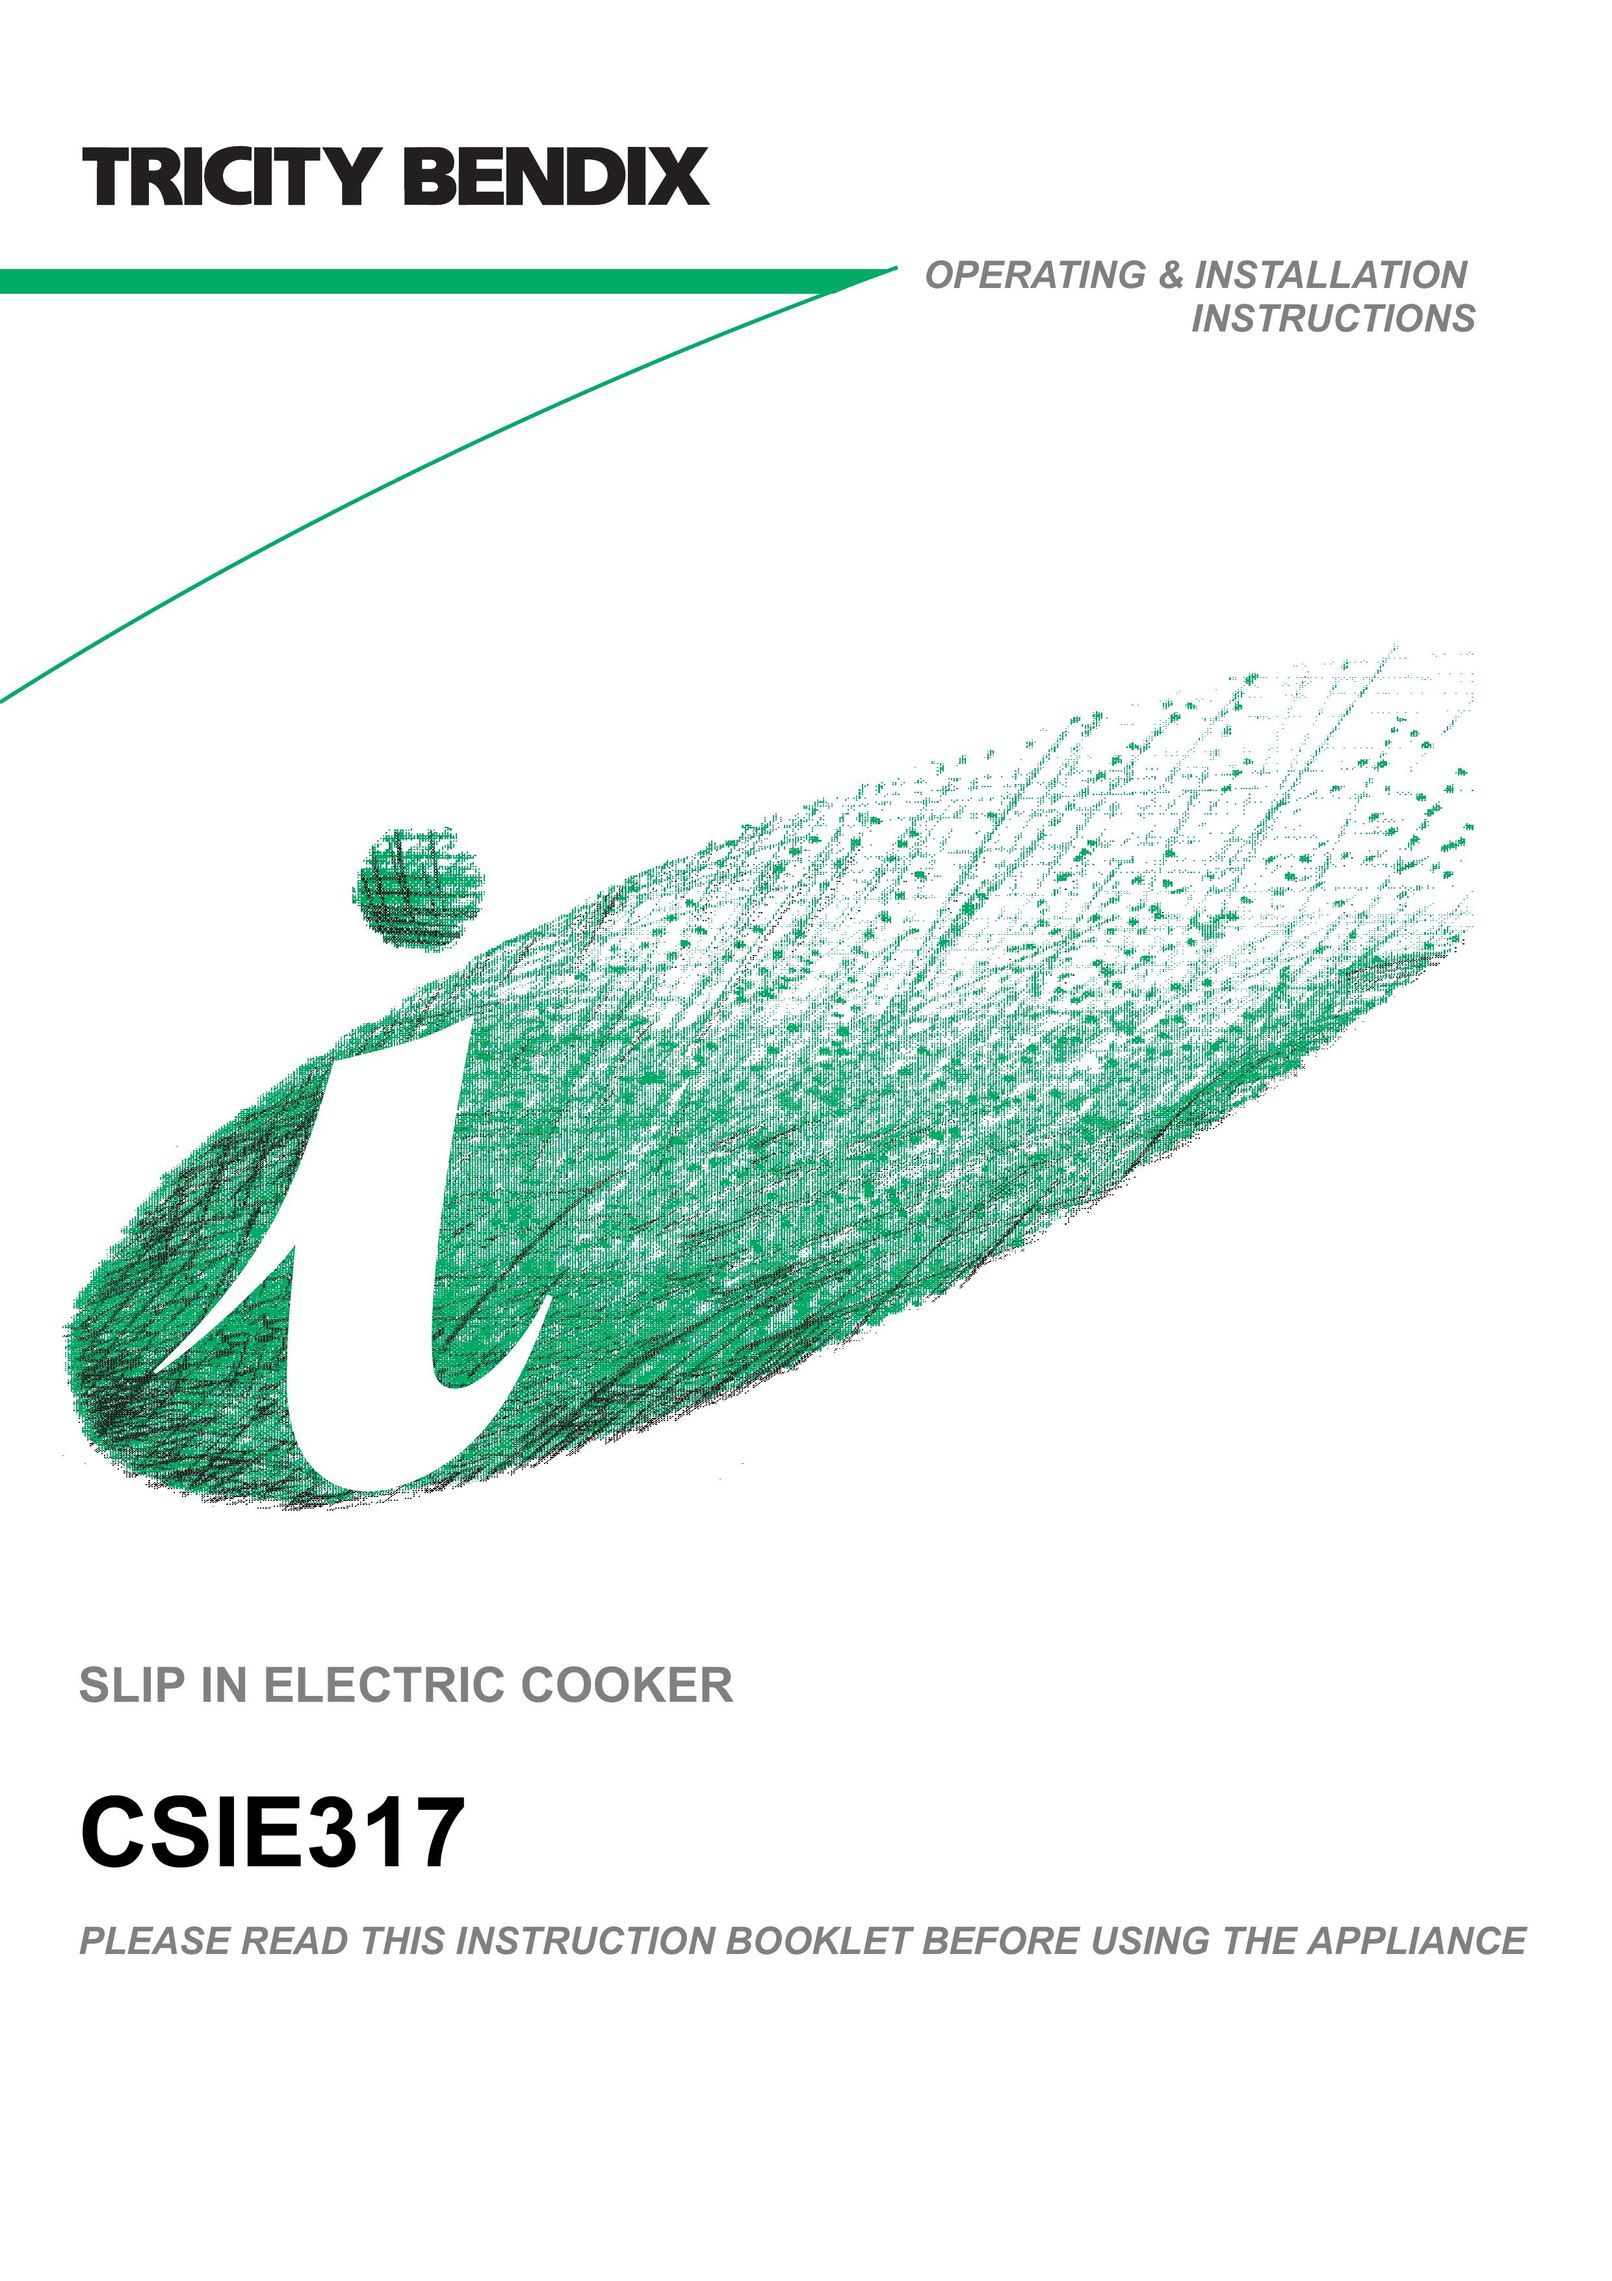 Tricity Bendix CSIE317 Cooktop User Manual